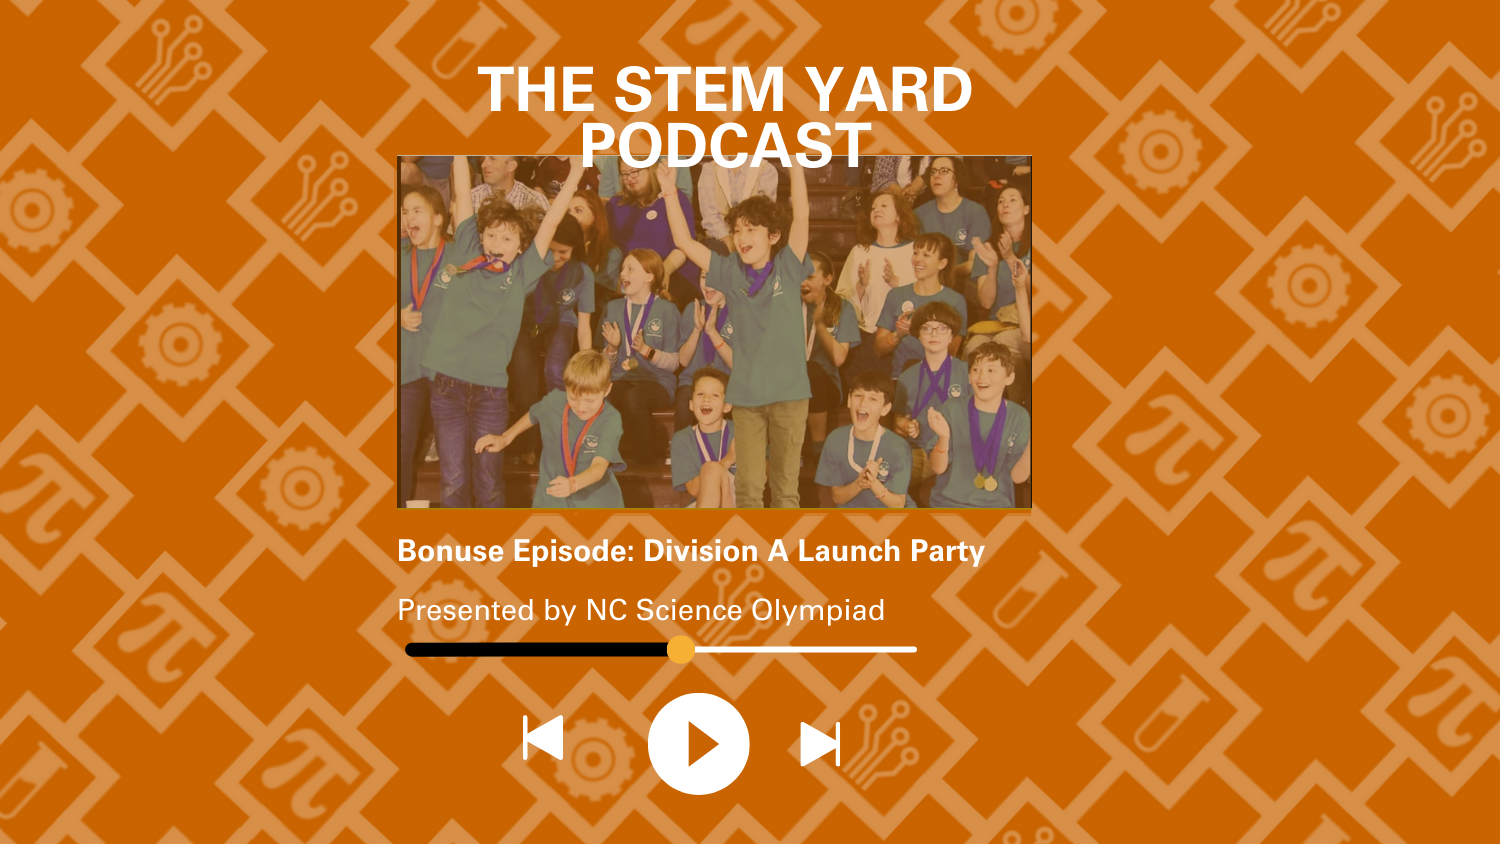 The STEM Yard Podcast Bonus Episode - Division A Launch Party